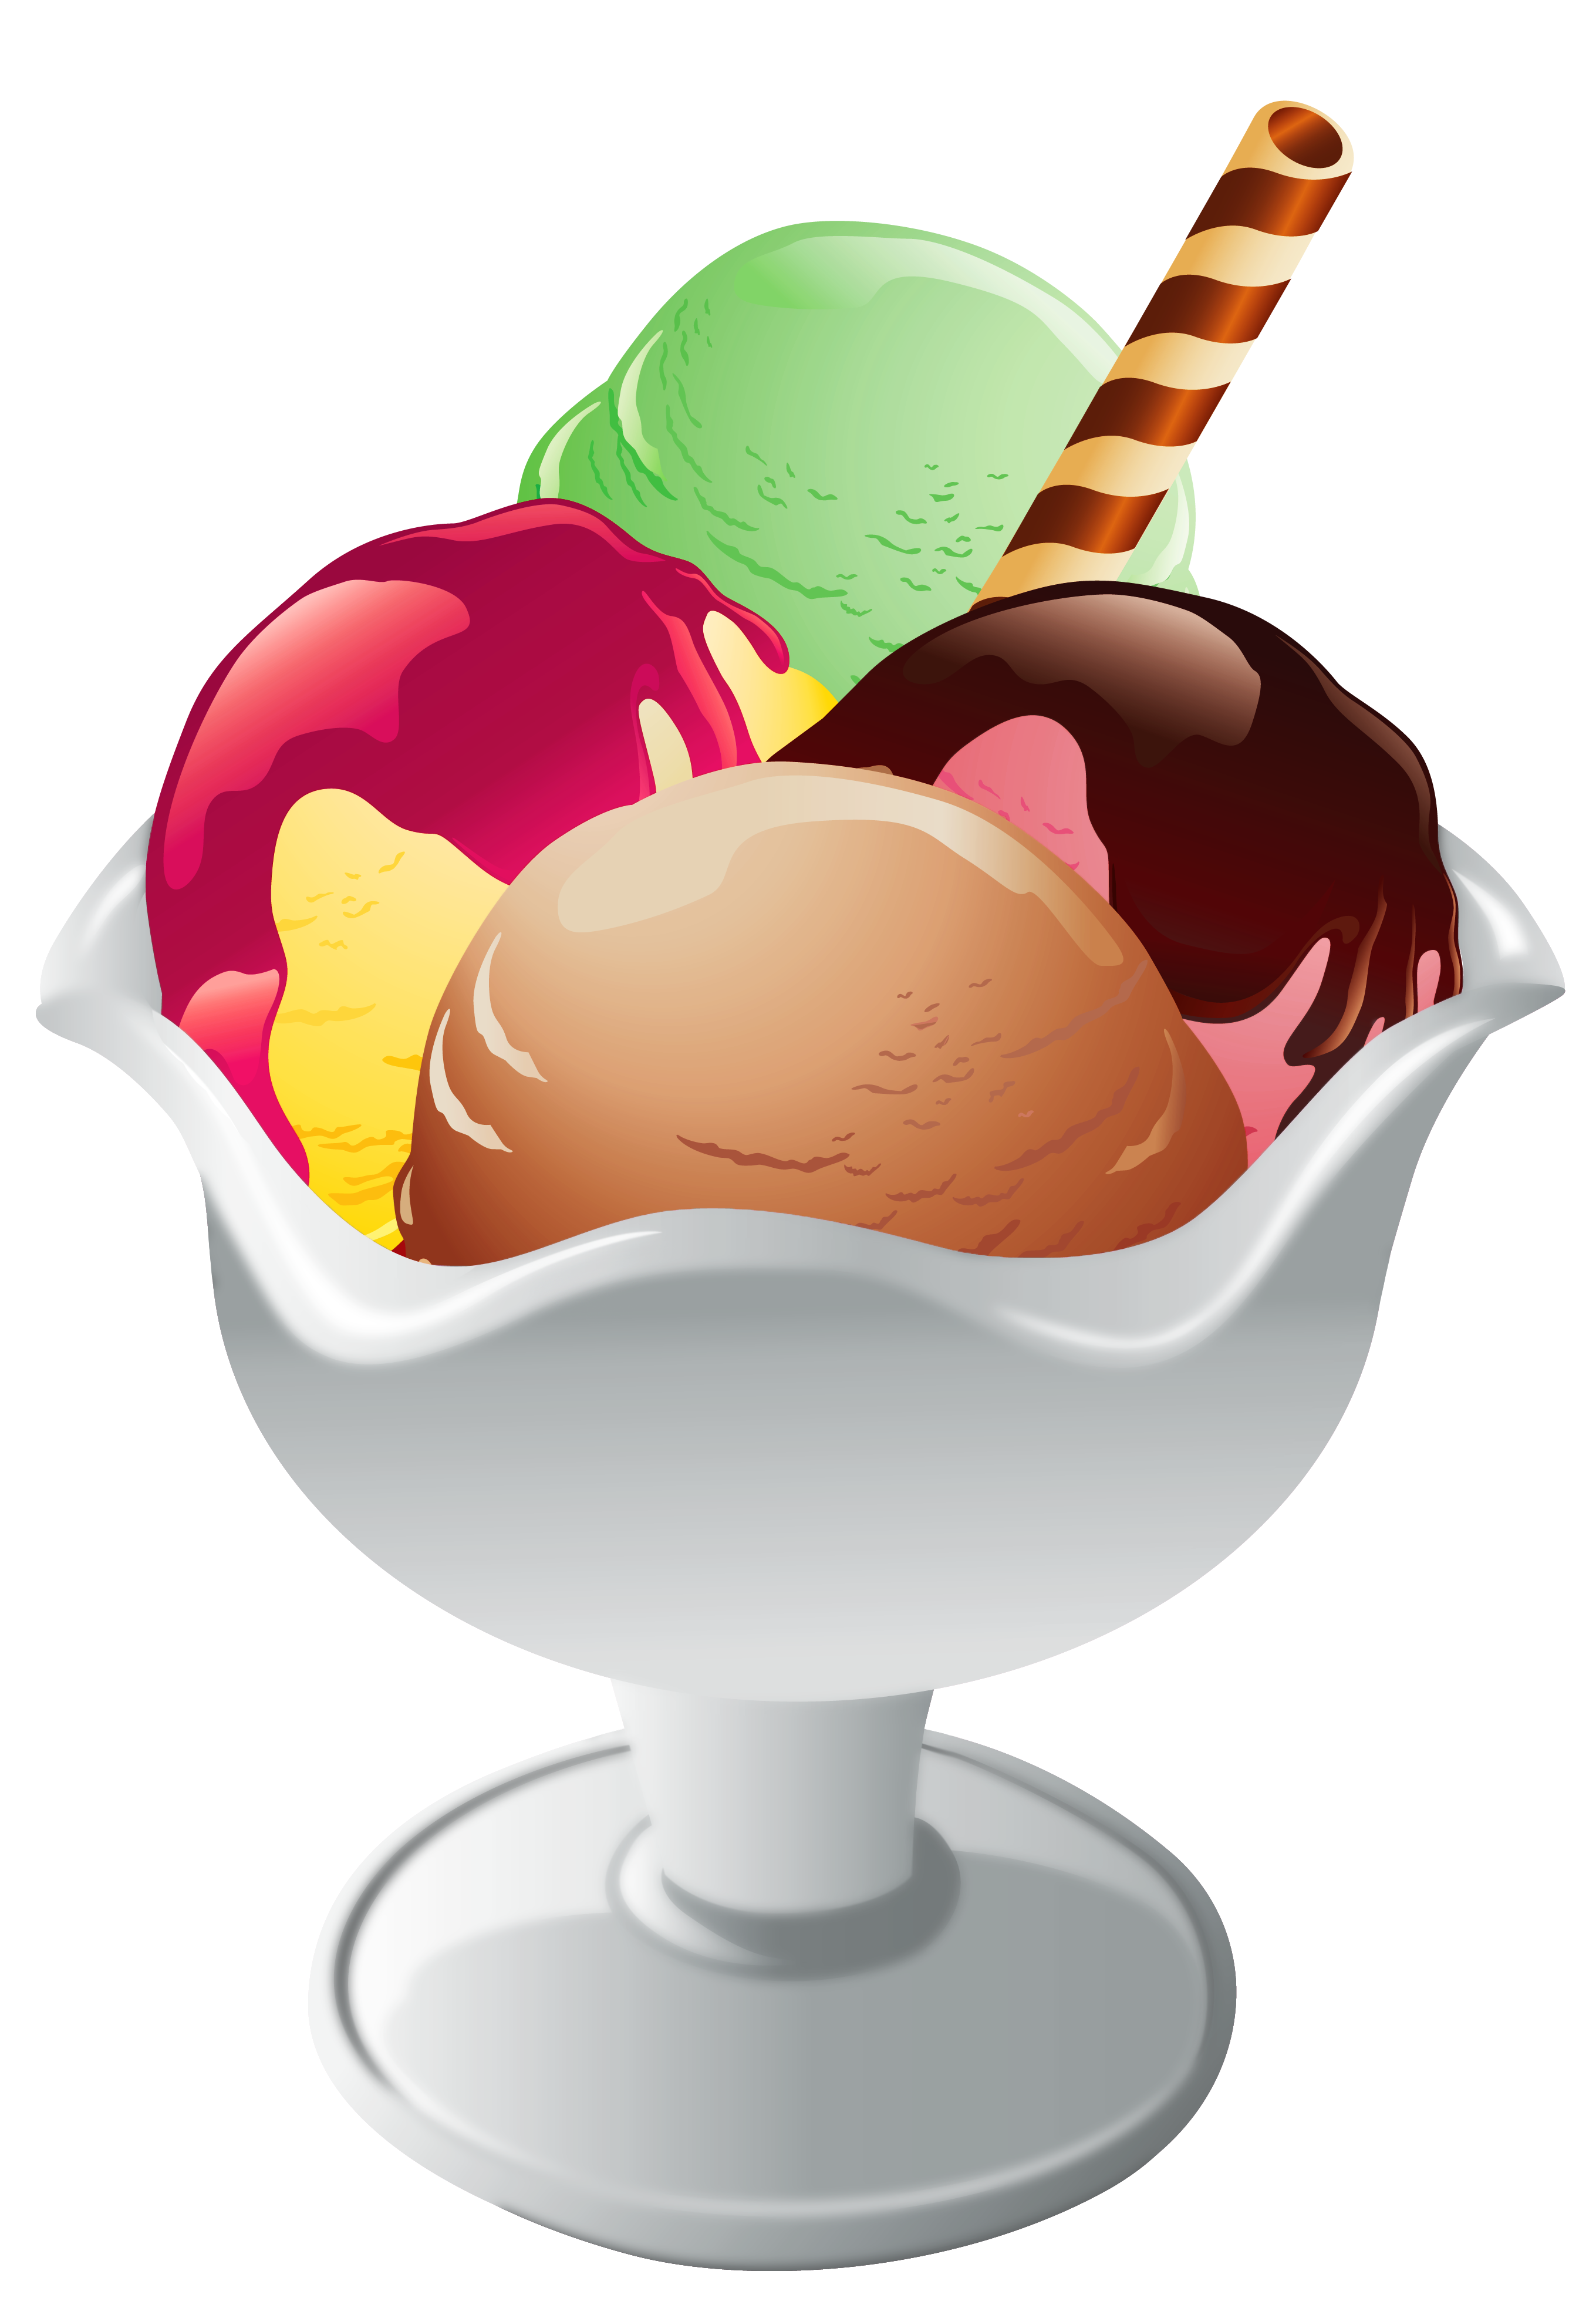 ice cream sundae clipart images - photo #8